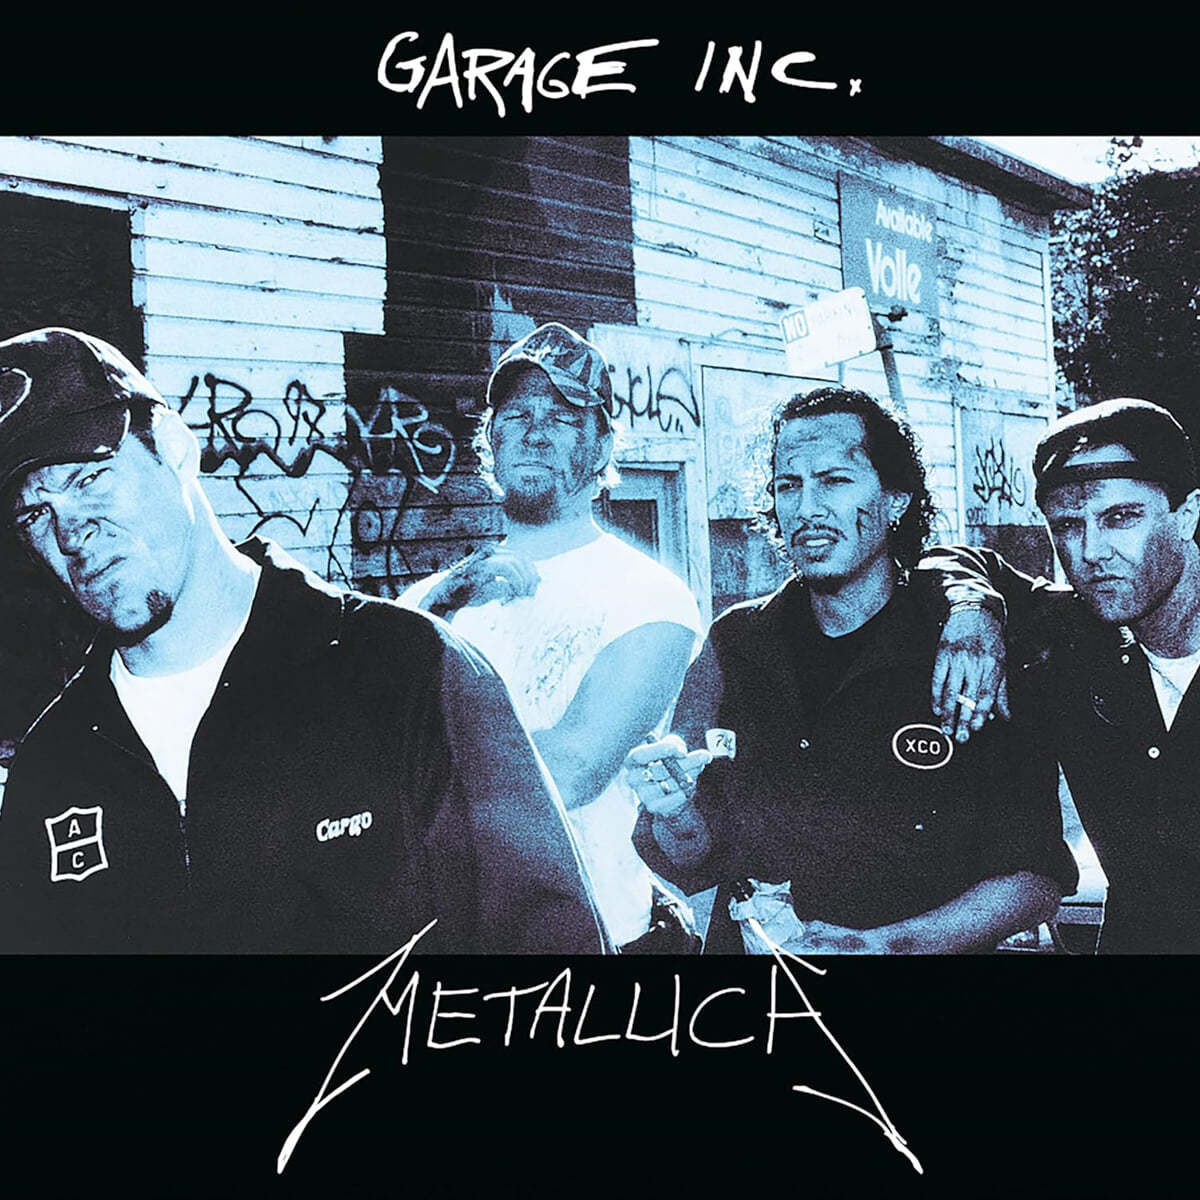 Metallica (메탈리카) - Garage Inc. [컬러 3LP] 